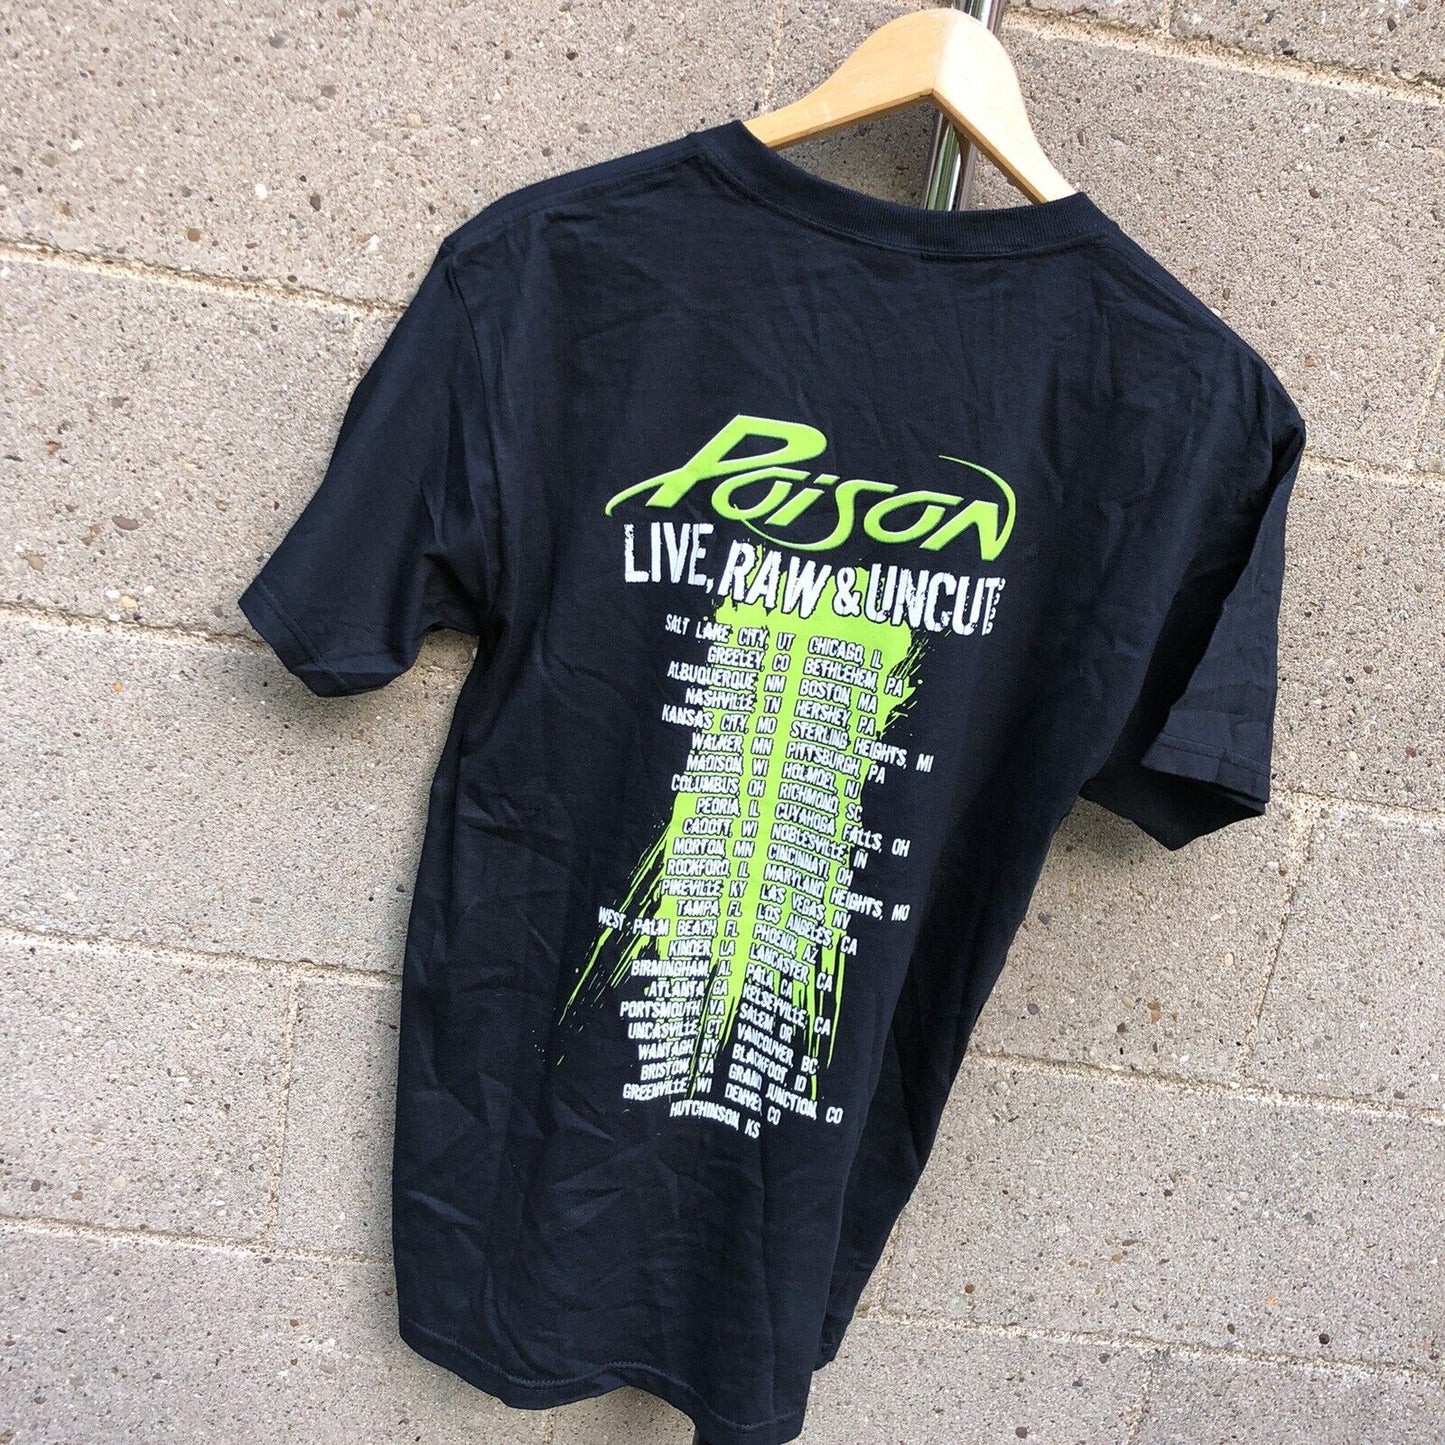 2008 POISON "LIVE, RAW & UNCUT" Medium T-Shirt ROB DE LUCA SEBASTIAN BACH